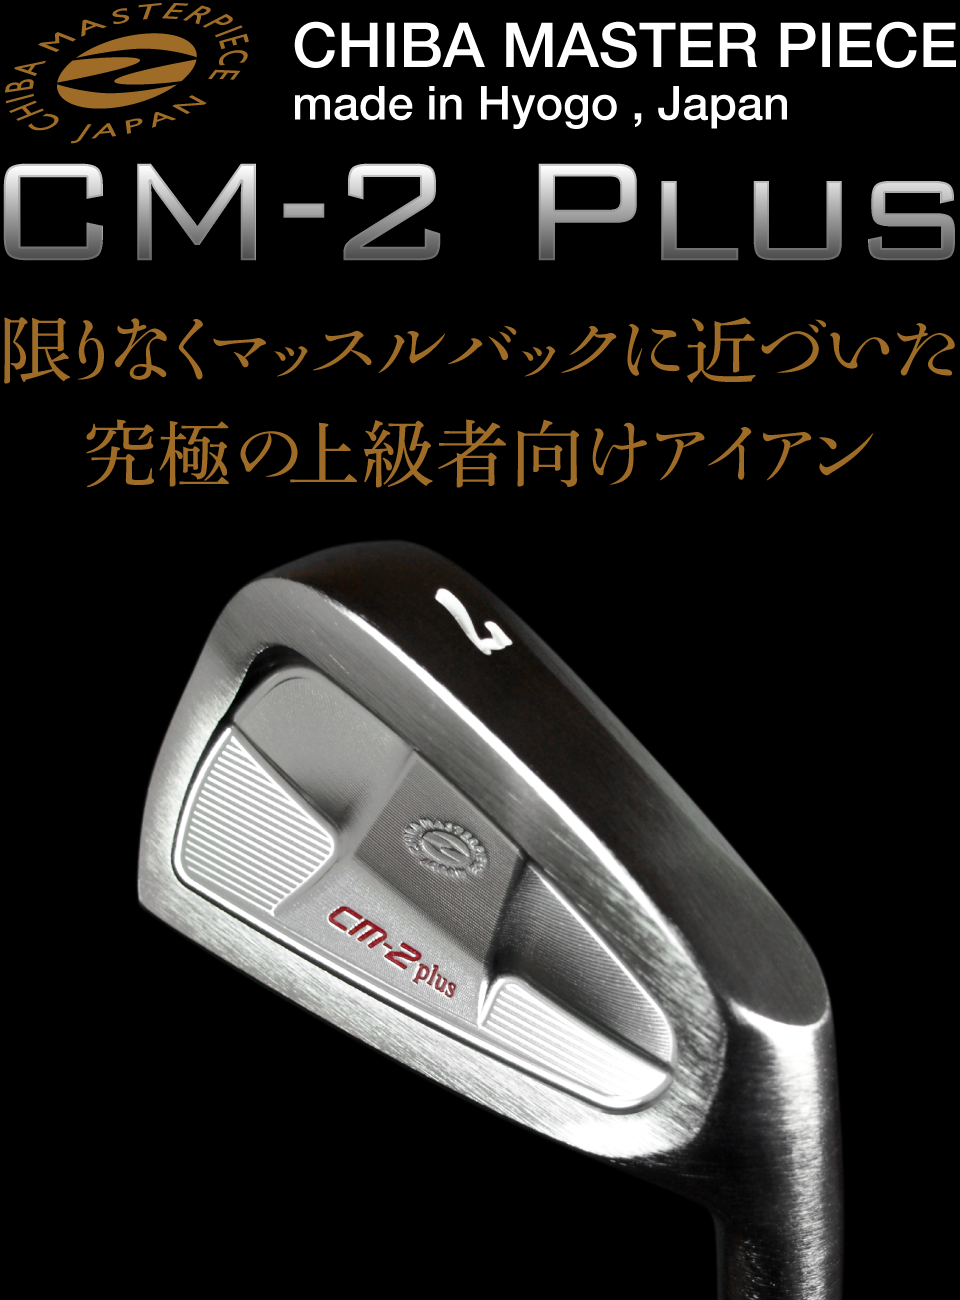 CM-2 Plus – 製品情報 – Zodia（ゾディア） 公式サイト